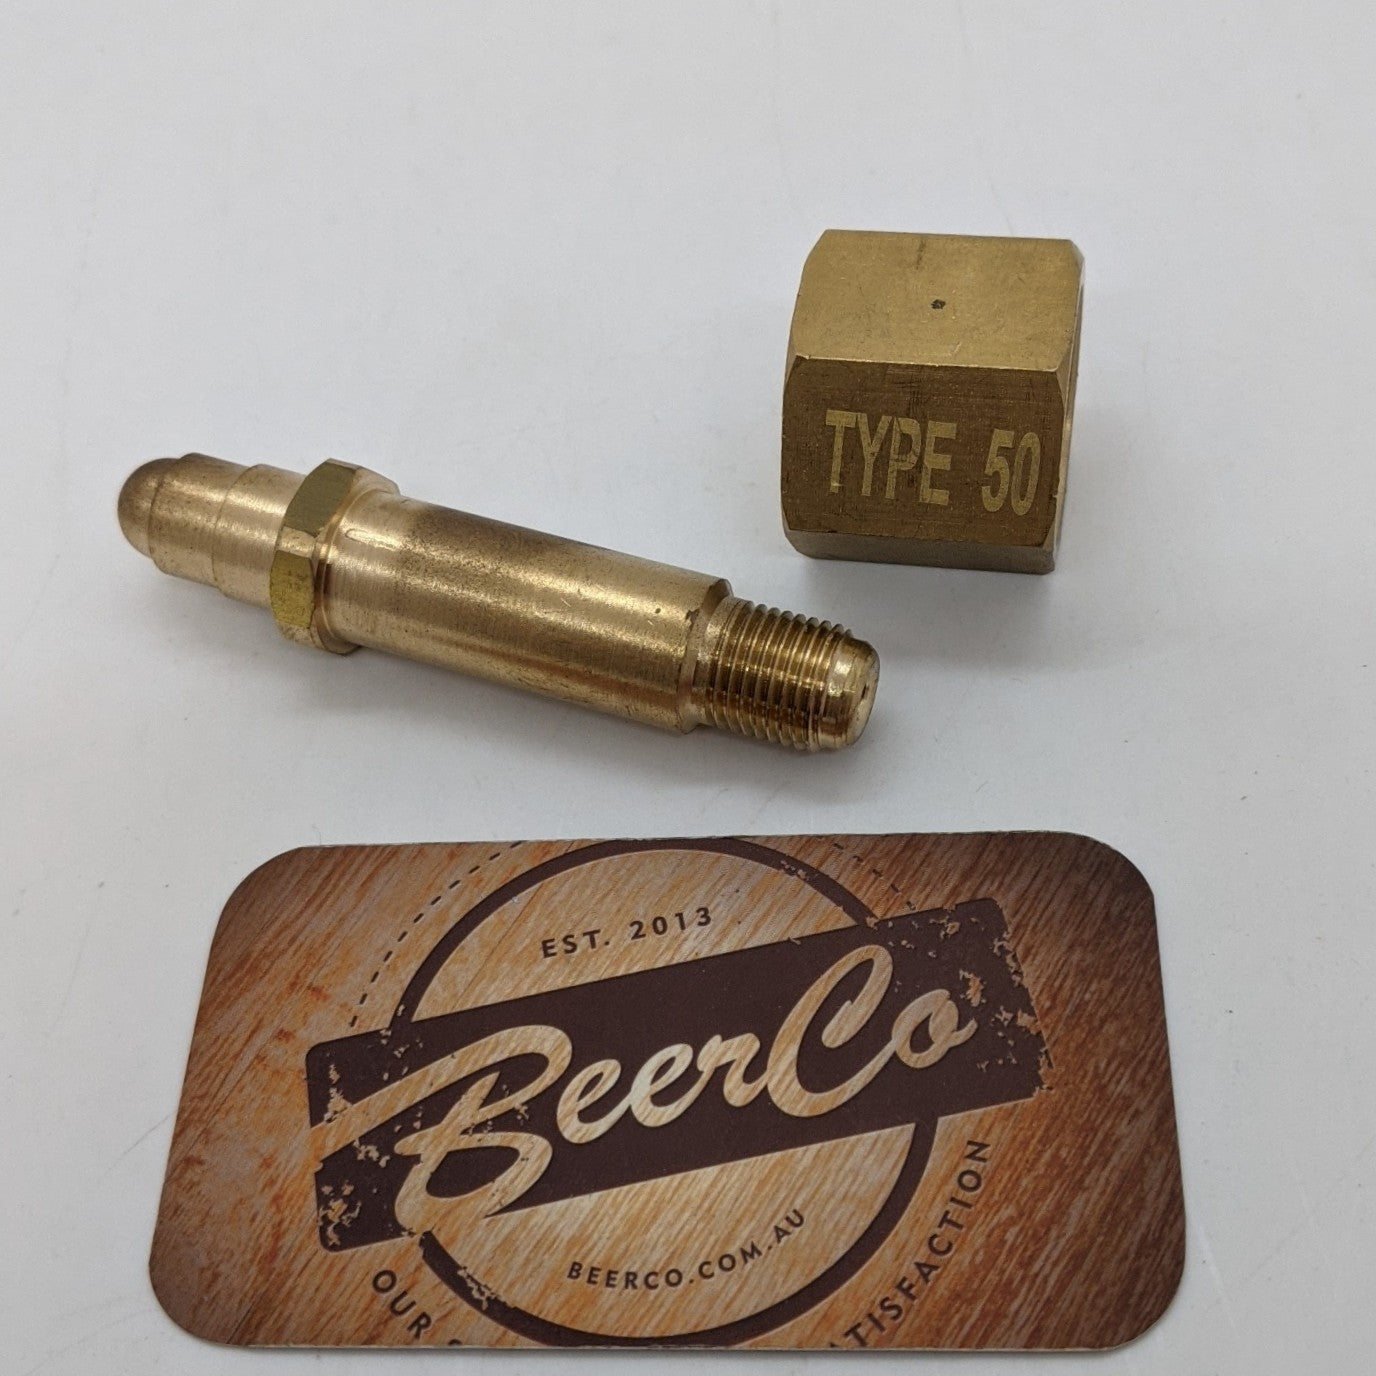 Type 50 | 1/4 inch thread nut & stem